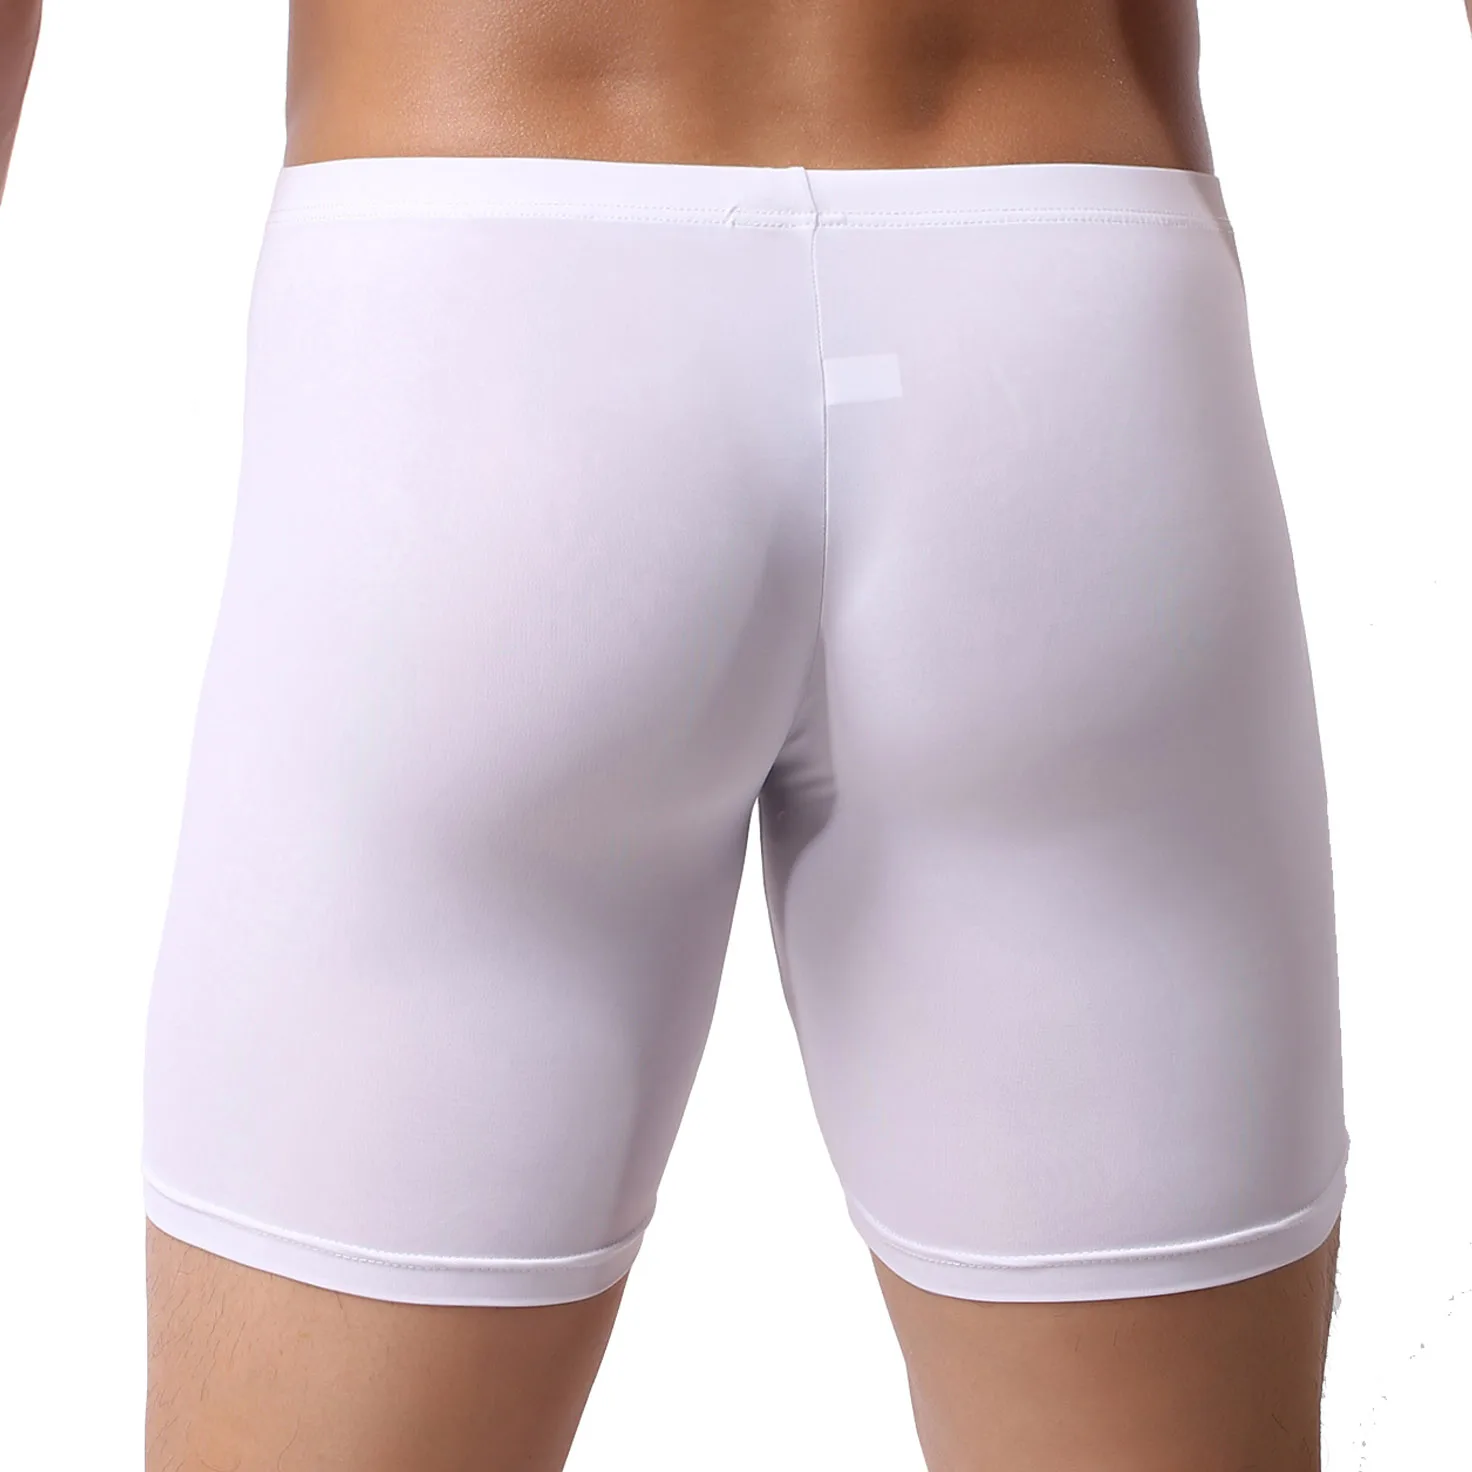 2xist Essential Long John 20108 White Mens Underwear